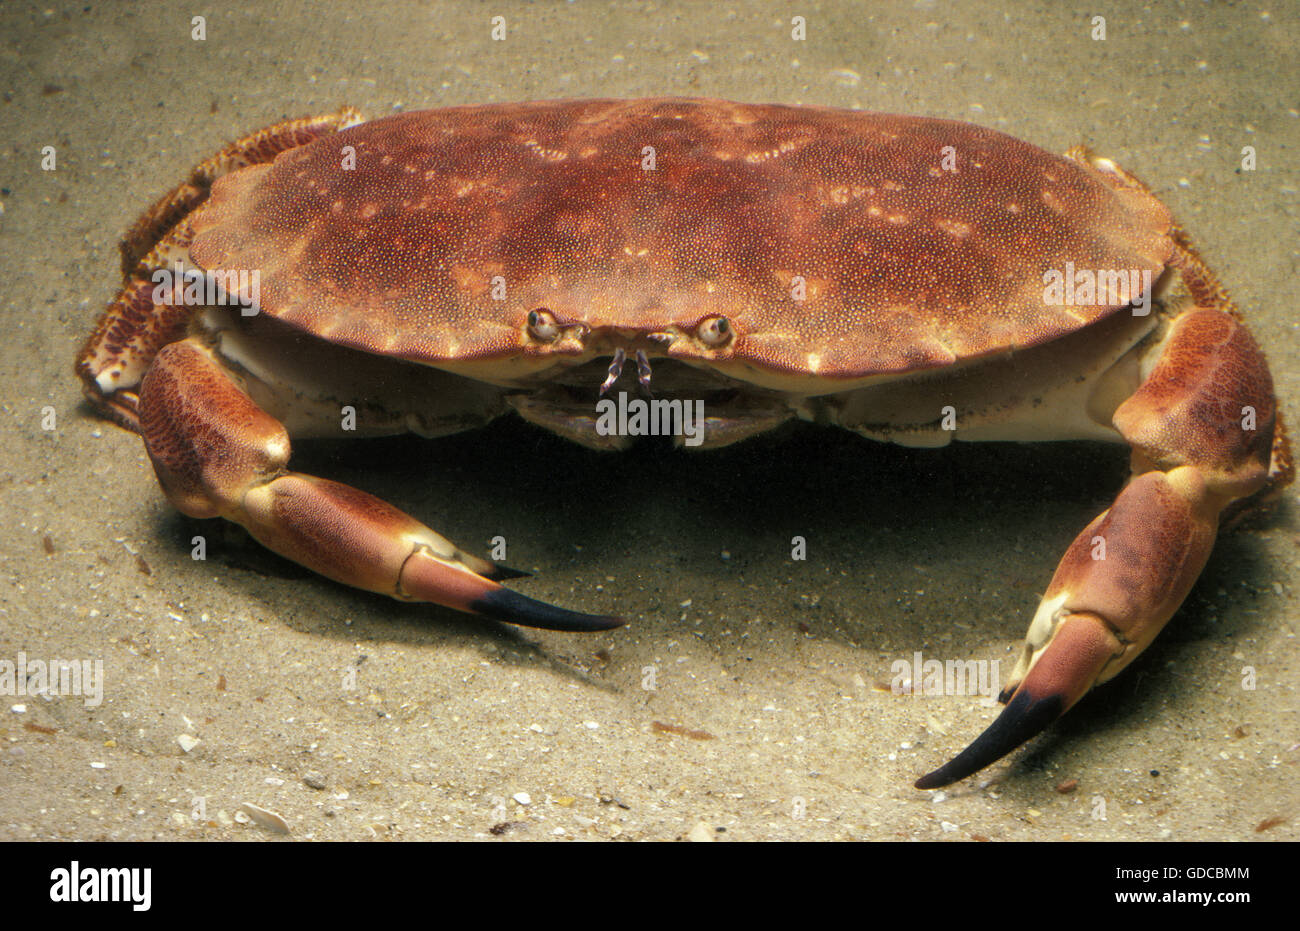 Crabe, Cancer pagurus, adulte Banque D'Images